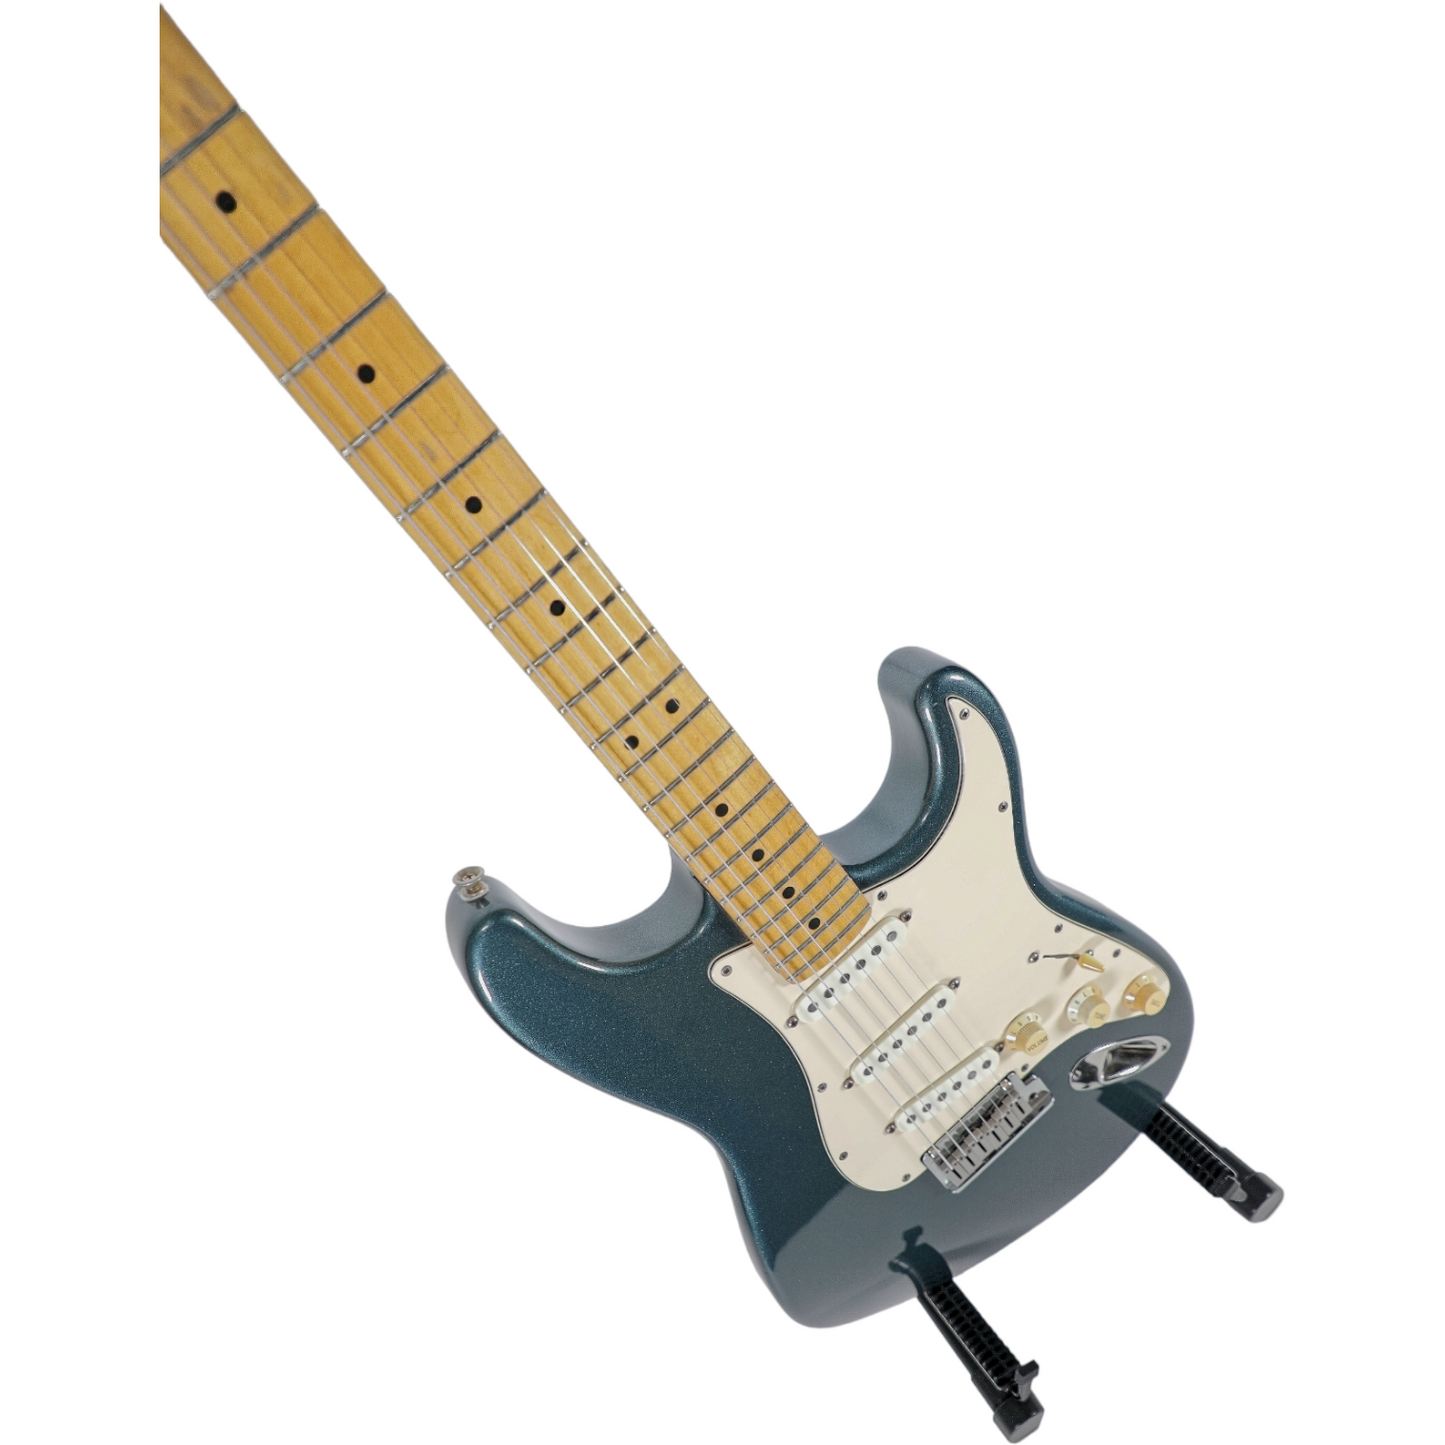 1989 Fender American Standard Stratocaster Gun Metal Blue